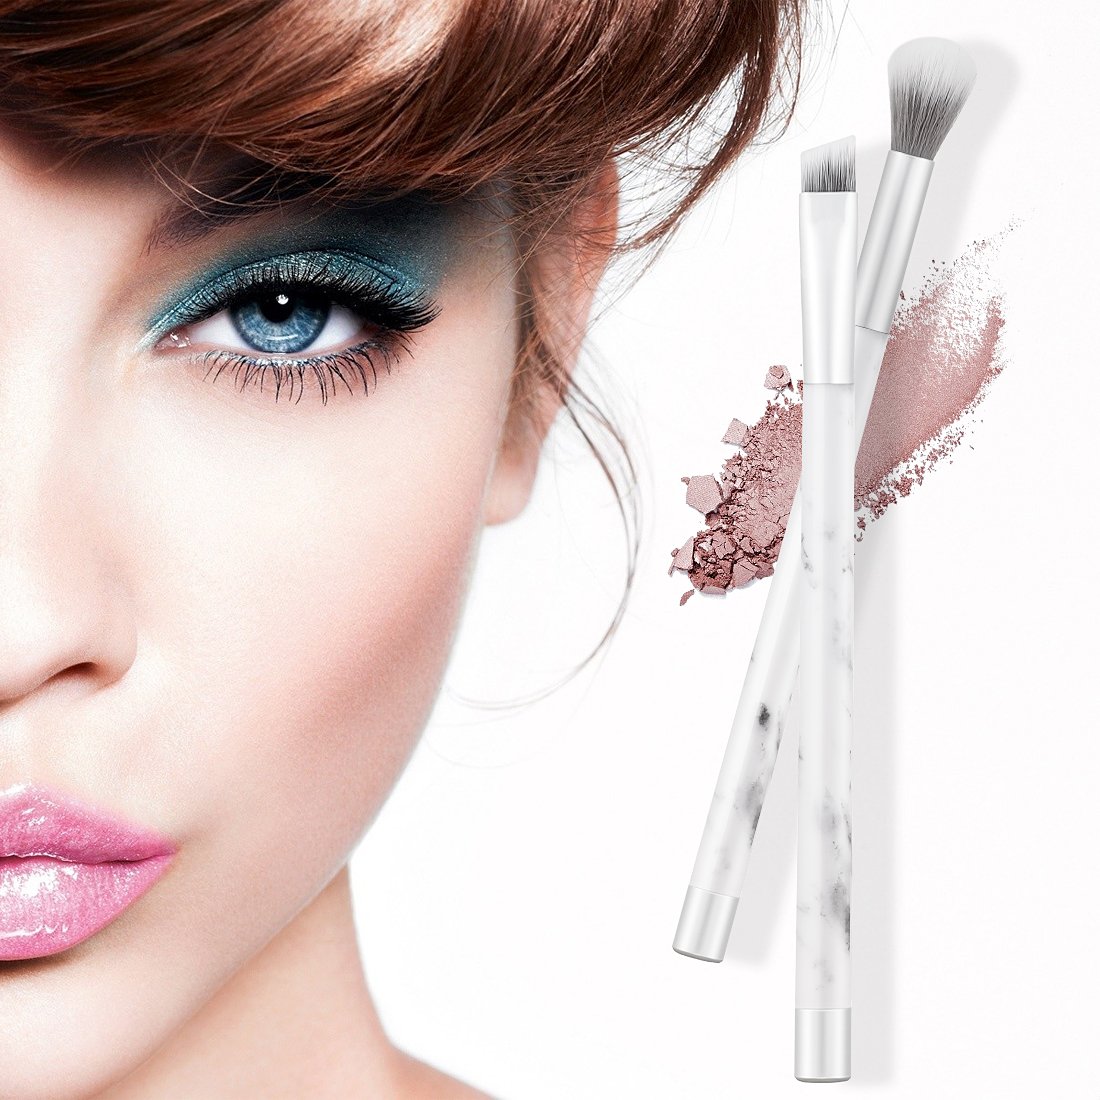 UNIMEIX Marble Makeup Brushes 15 Pieces Makeup Brush Set Premium Face Eyeliner Blush Contour Foundation Cosmetic Brushes for Powder Liquid Cream